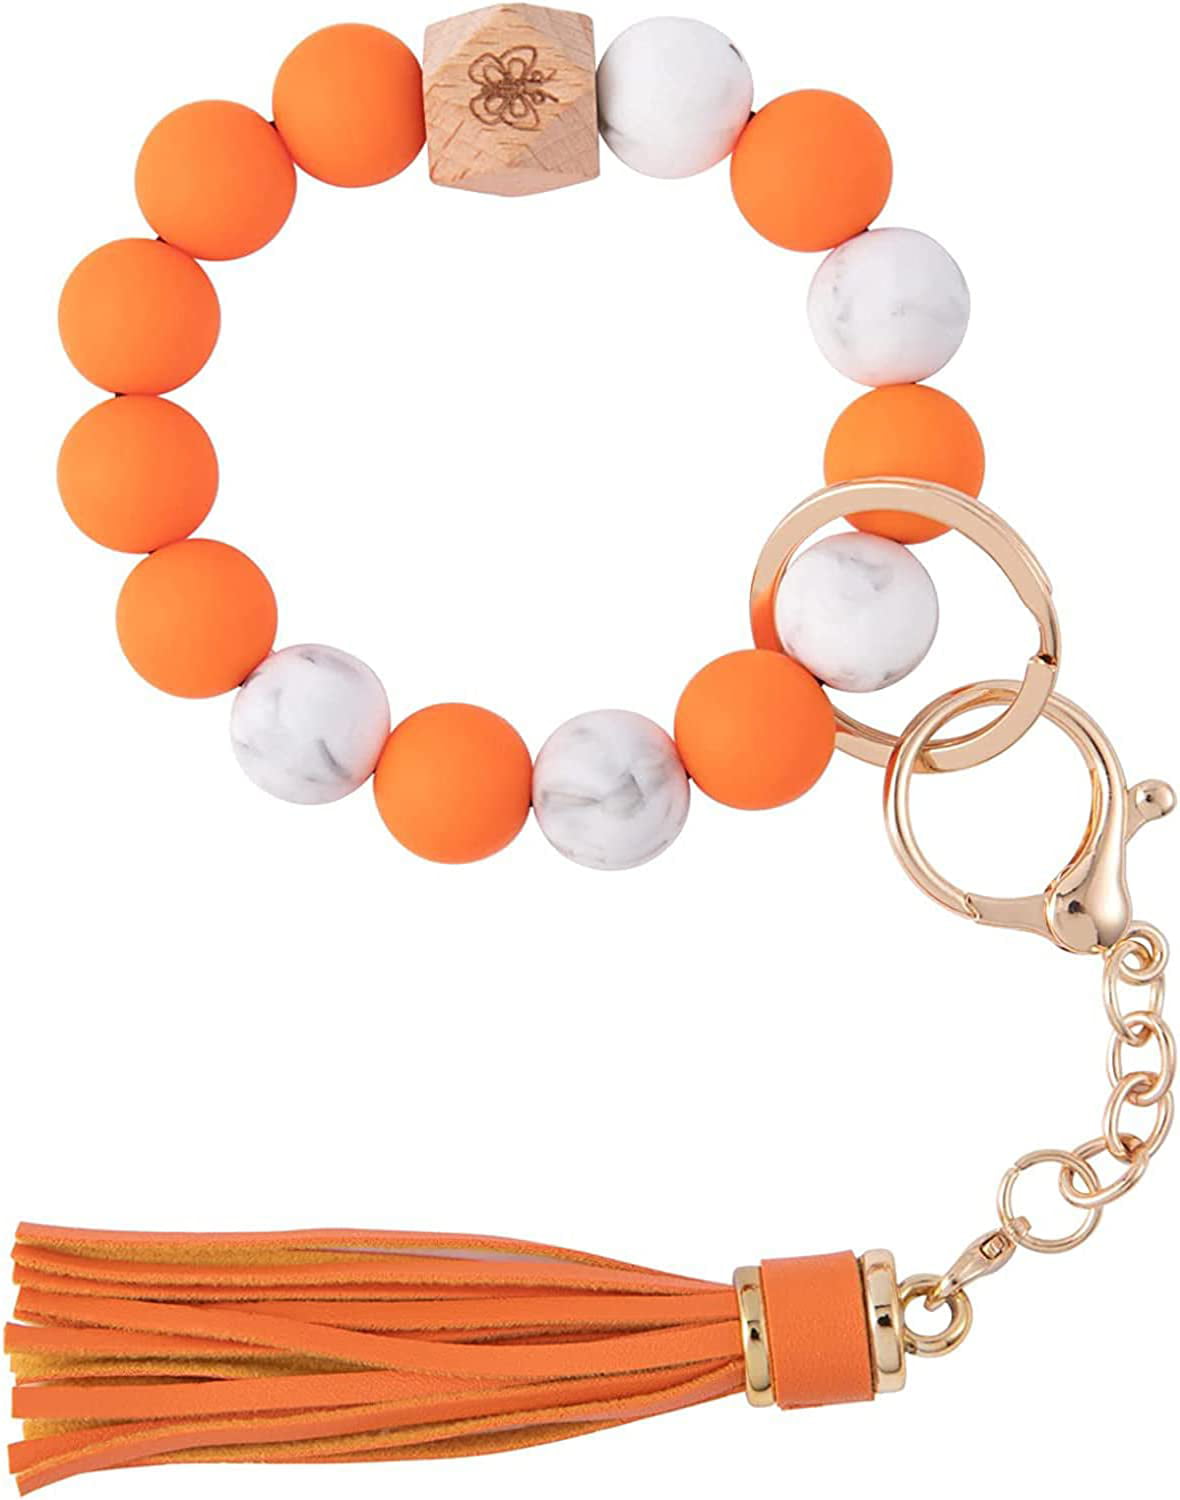 ArtCentury Orange Silicone Beads for Keychain Making, Orange and Yellow  Silicone Beads 15MM,15MM Silicone Beads Bulk Orange Silicone Beads with  Tassel